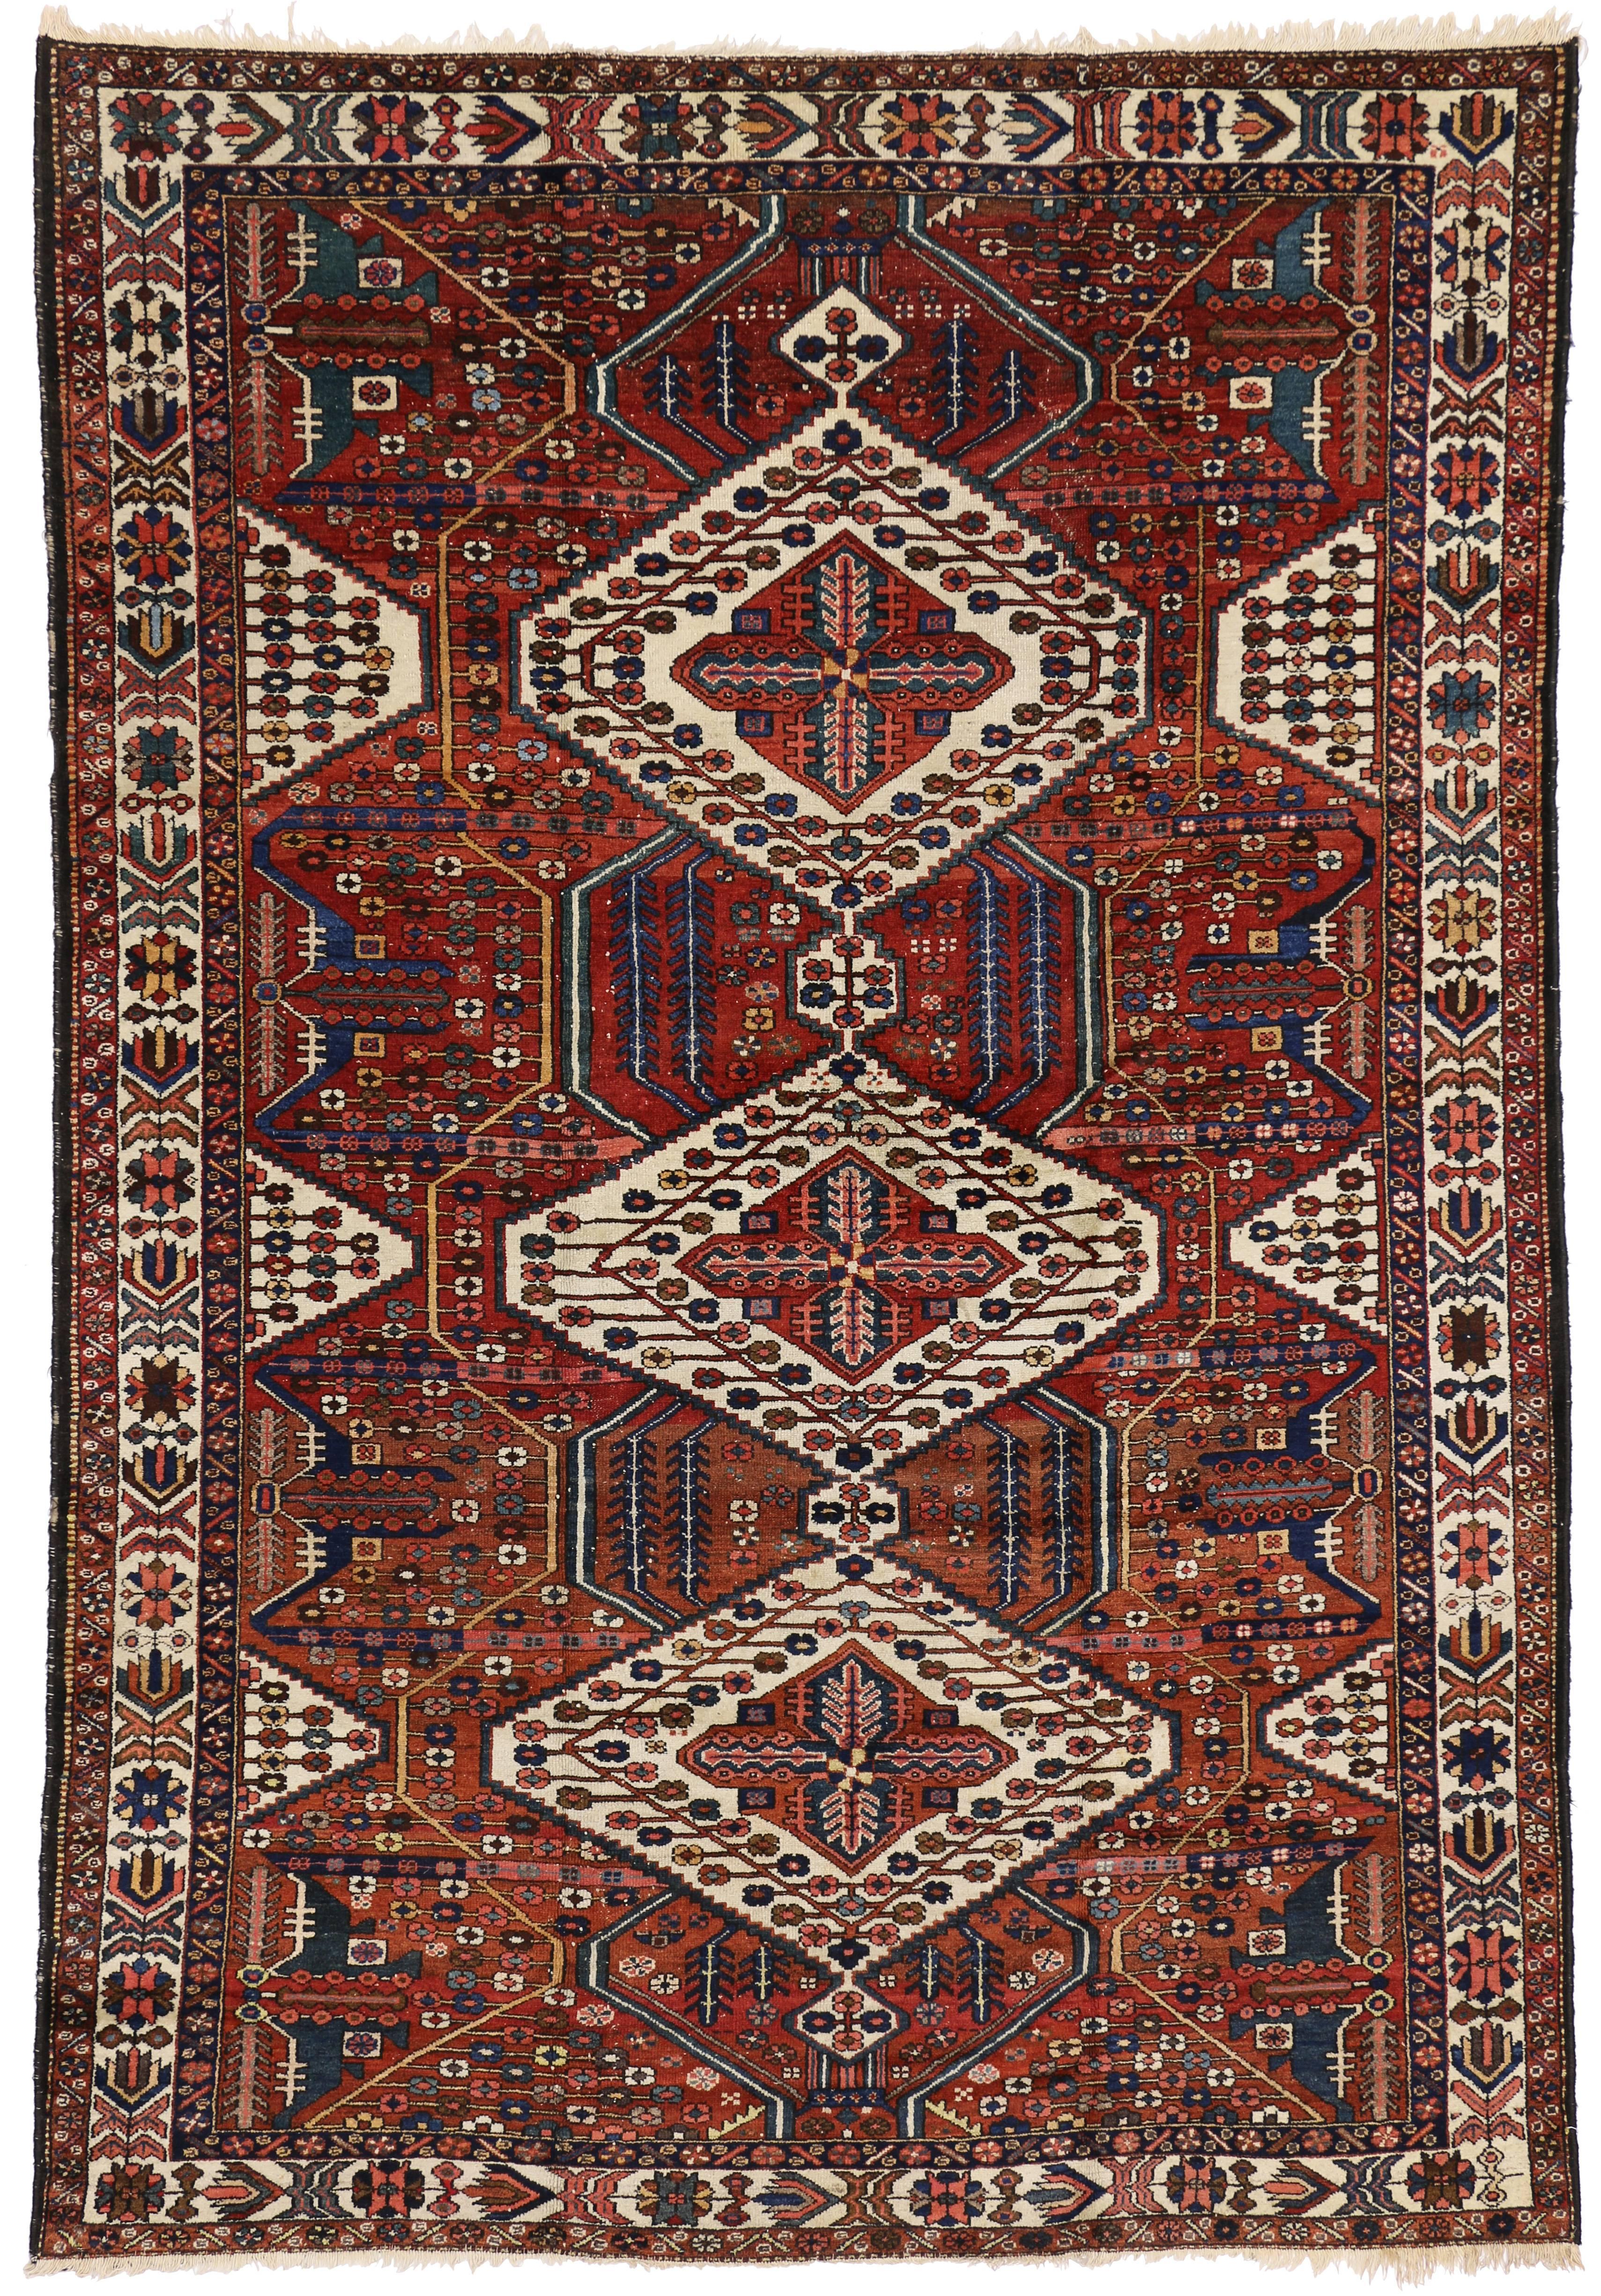 Wool Antique Persian Bakhtiari Rug, Midcentury Modern Meets Tribal Enchantment For Sale